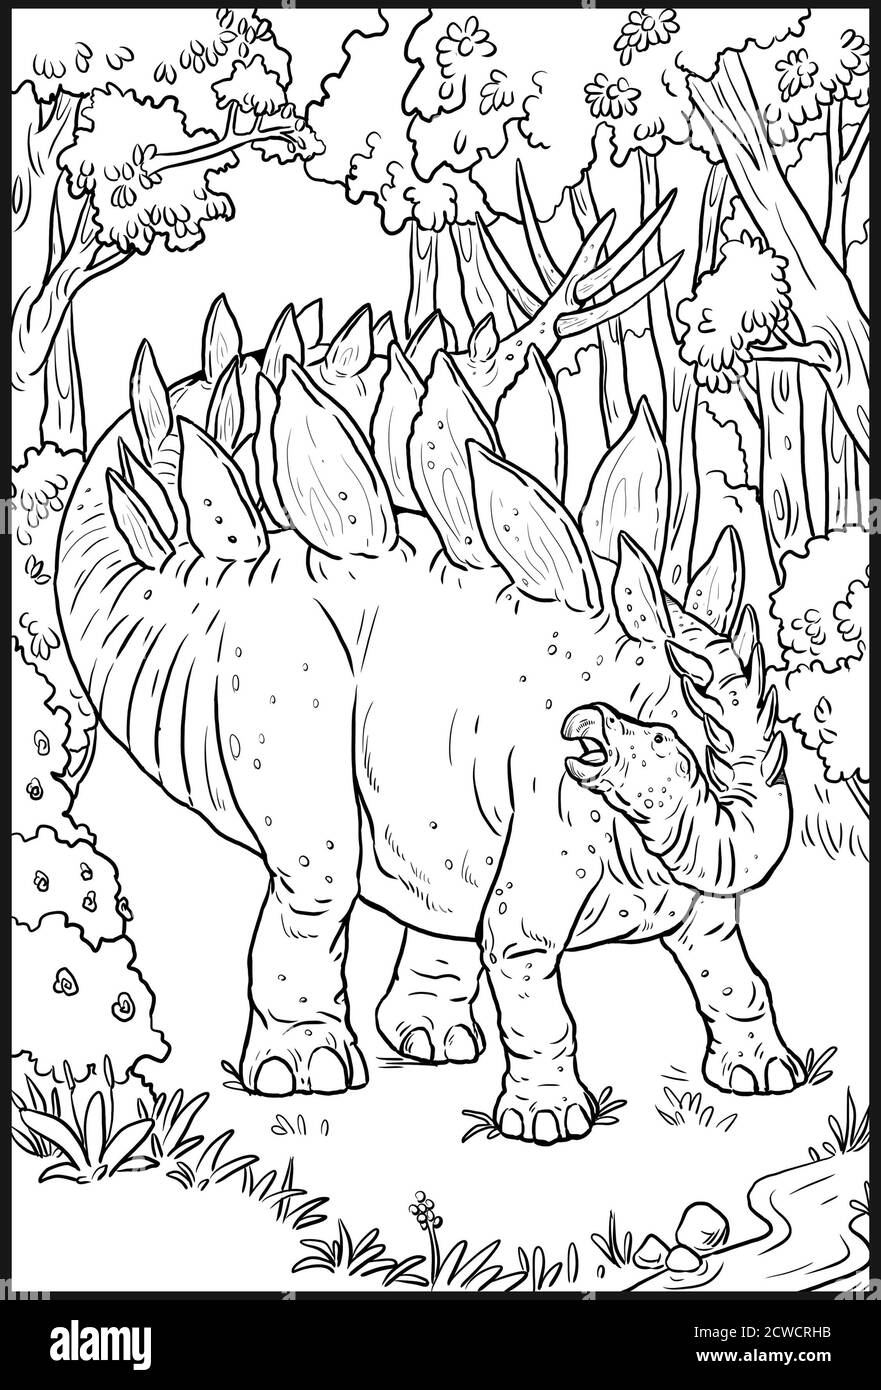 Herbivorous dinosaur - Stegosaurus. Dino outline drawing. Coloring page. Stock Photo